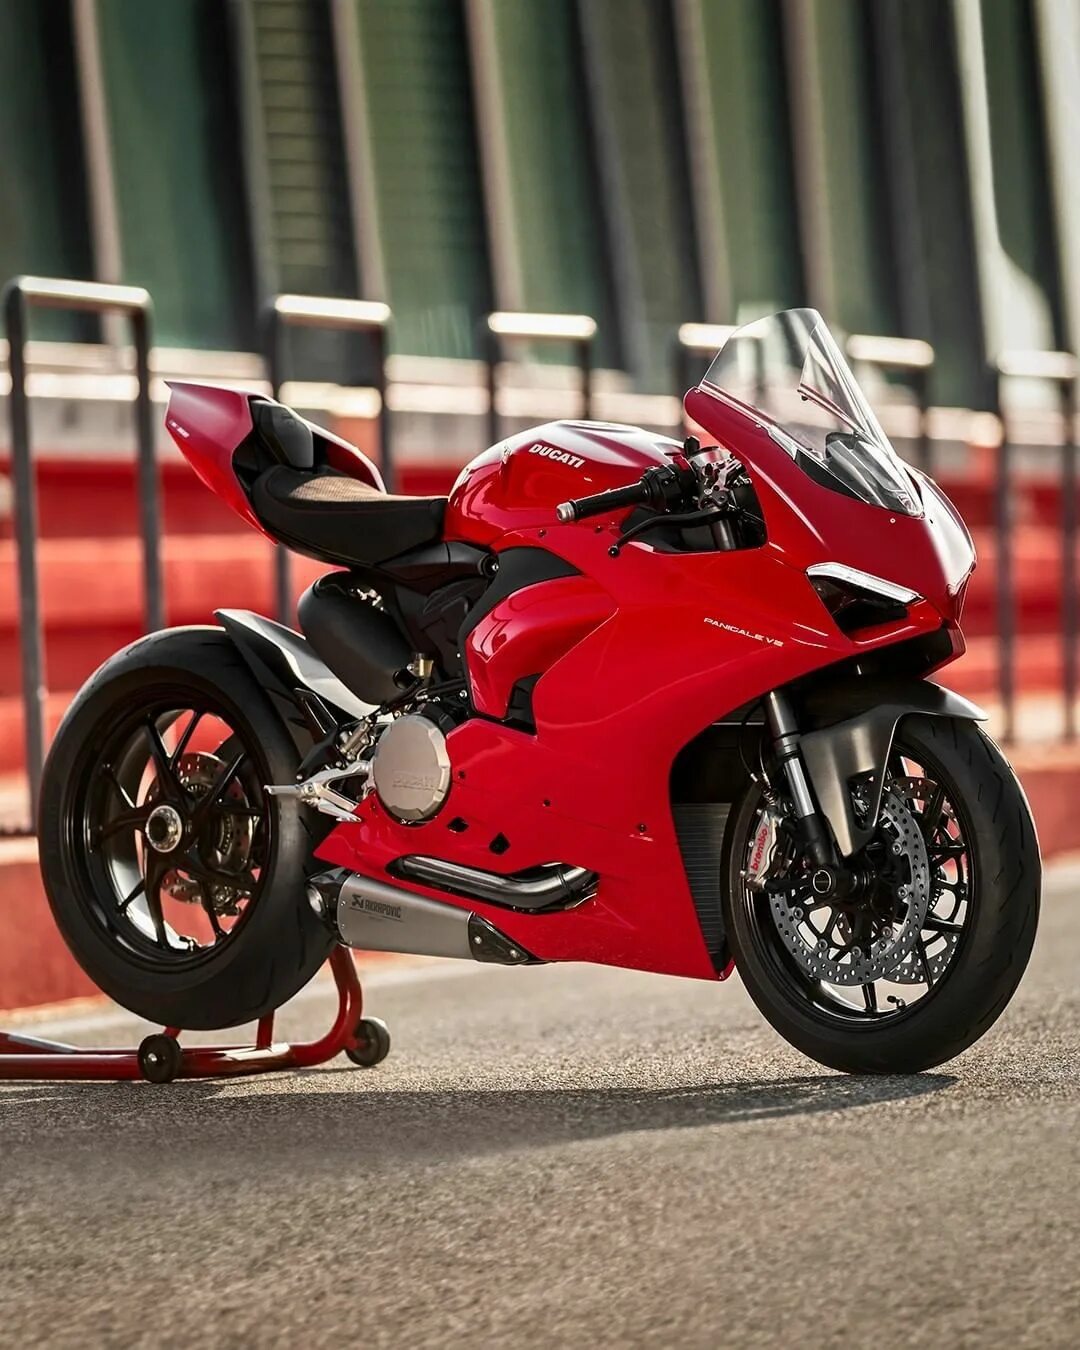 Мотоцикл Ducati Panigale v2. Мотоцикл Ducati Panigale v4 s. Дукати Панигале 2020. Дукати мотоцикл 2020.